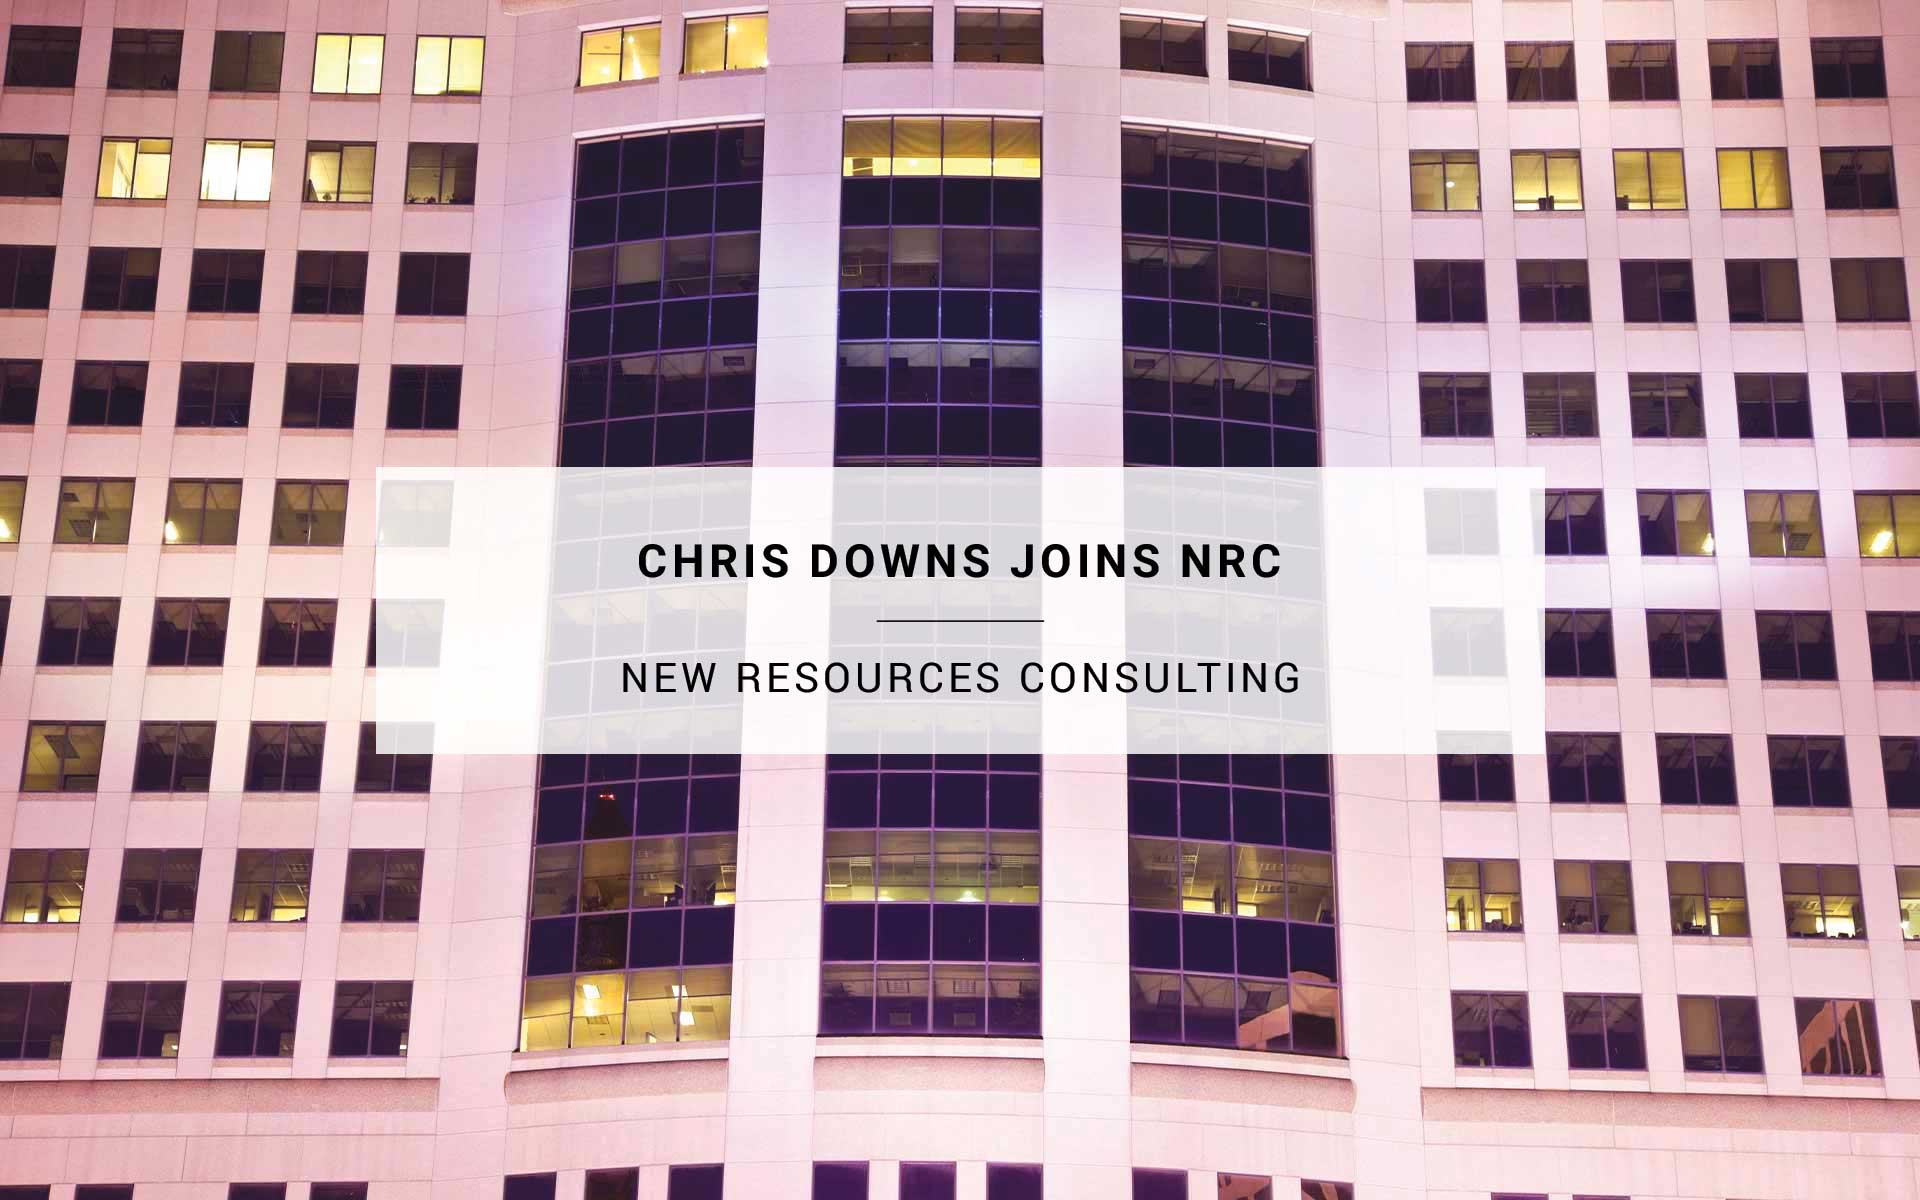 CHRIS DOWNS JOINS NRC